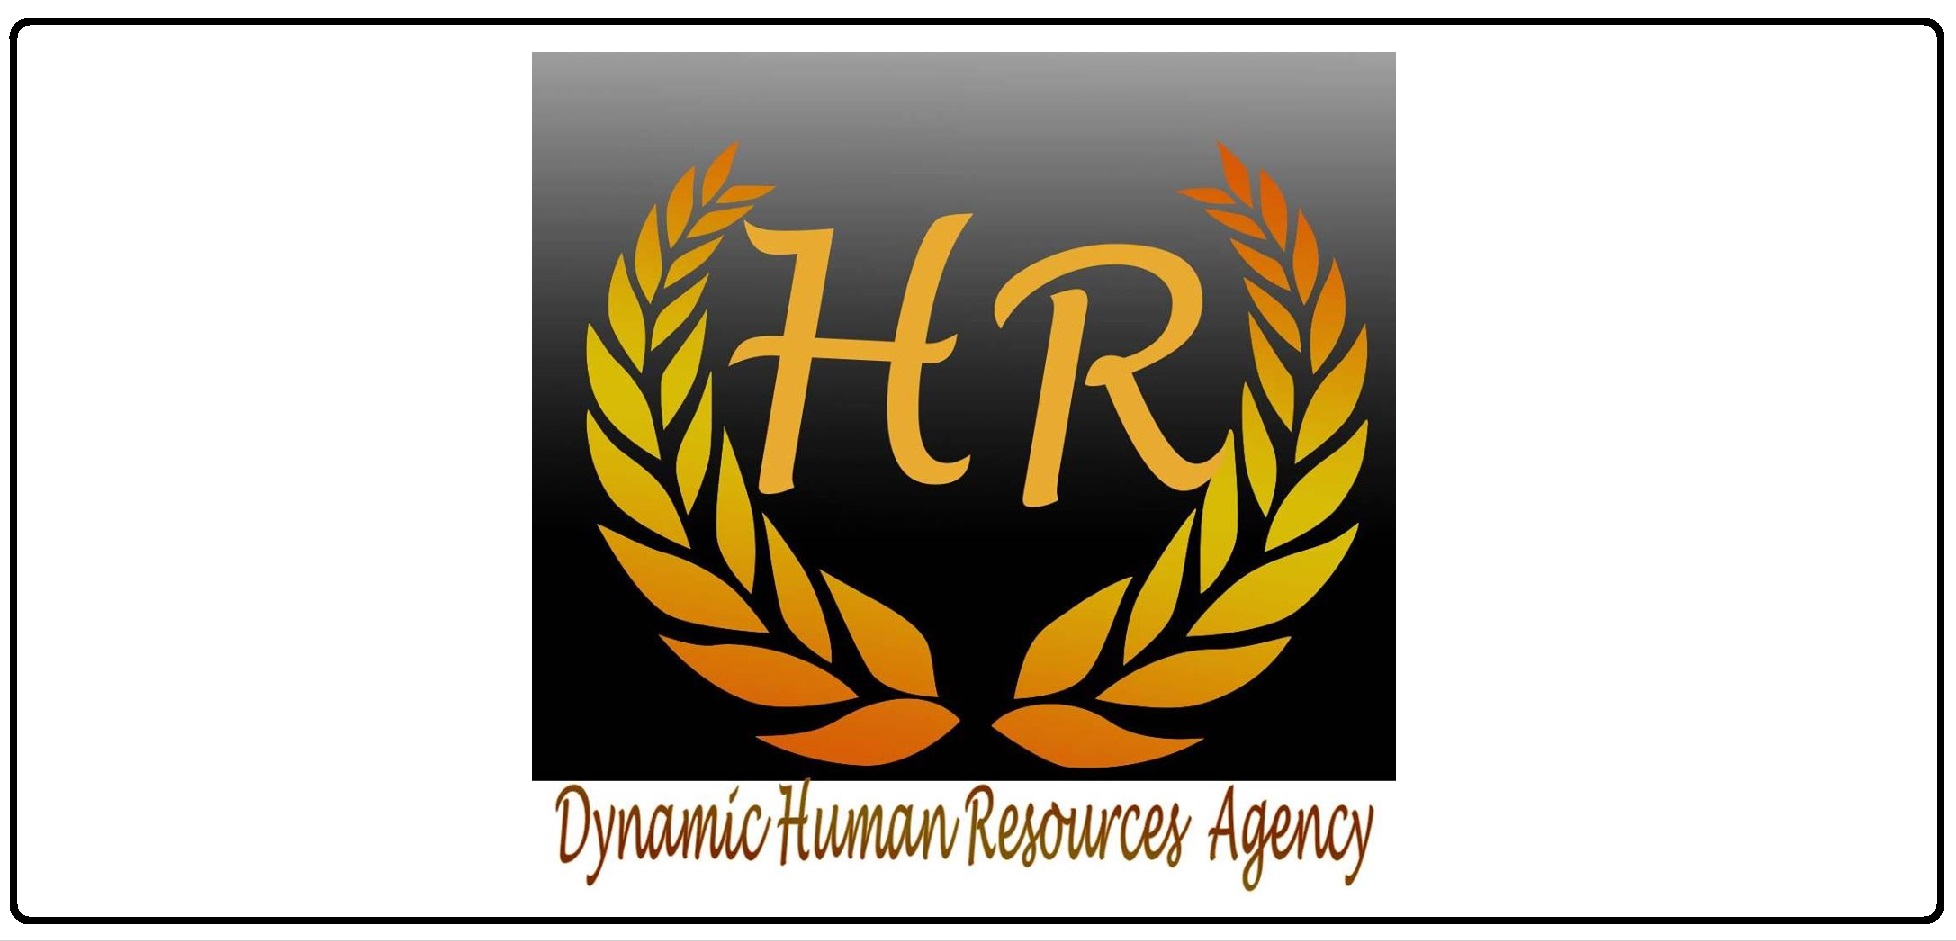 DHR AGENCY: DYNAMIC HUMAN RESOURCES AGENCY